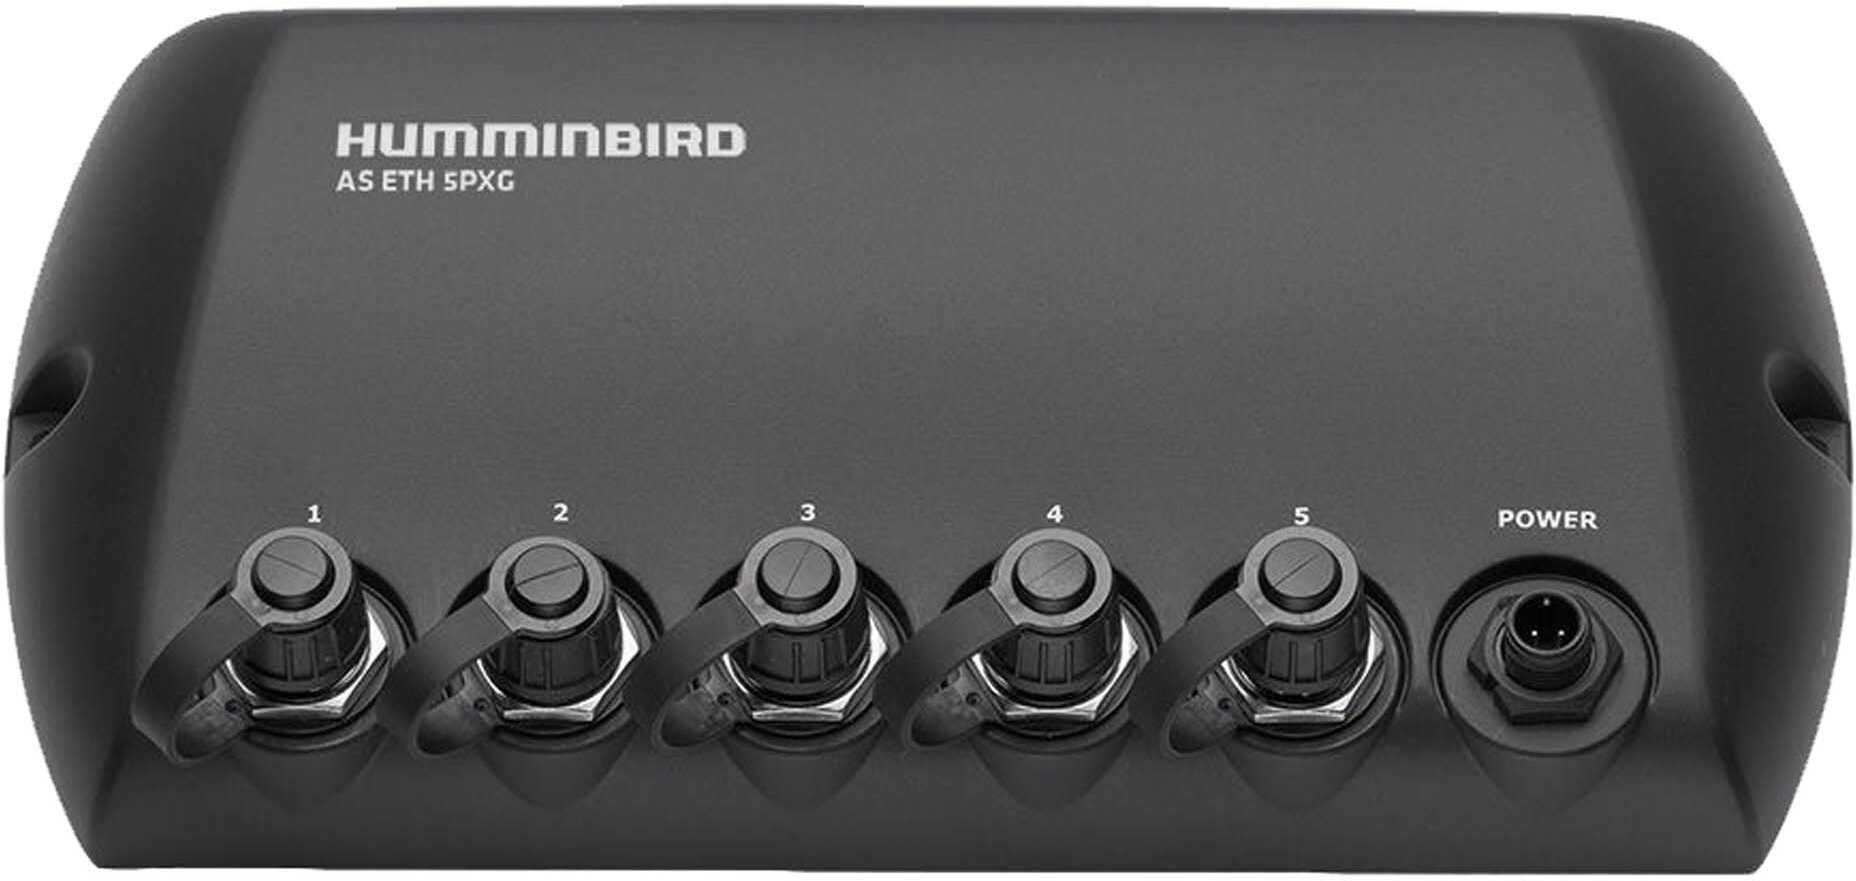 Humminbird AS ETH 5PXG 5 Port Ethernet Switch